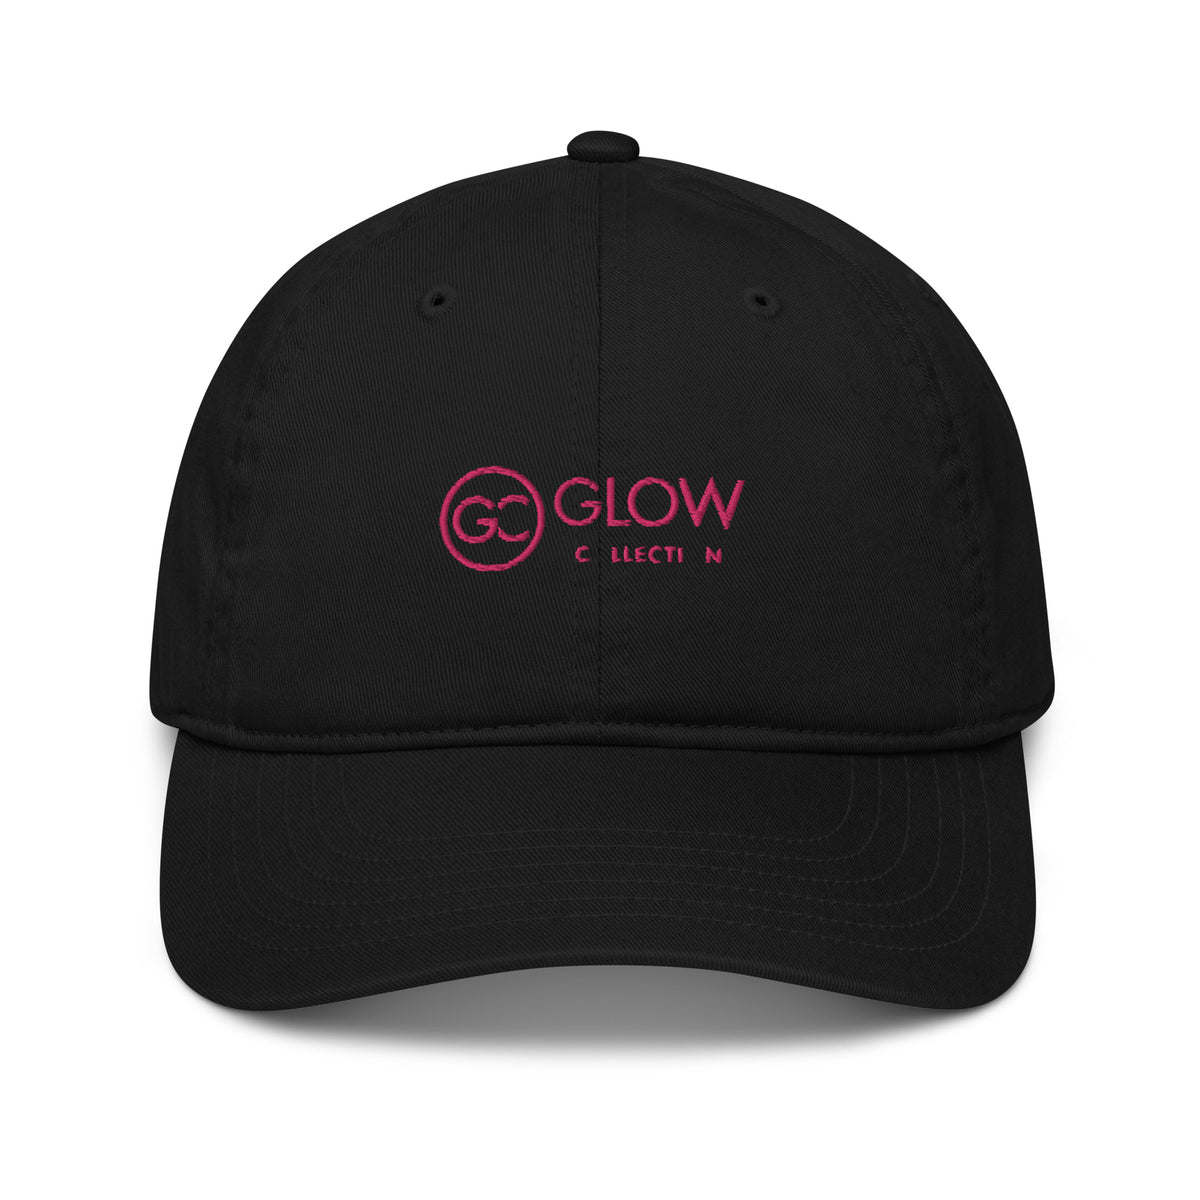 Glow Collection Baseball Cap